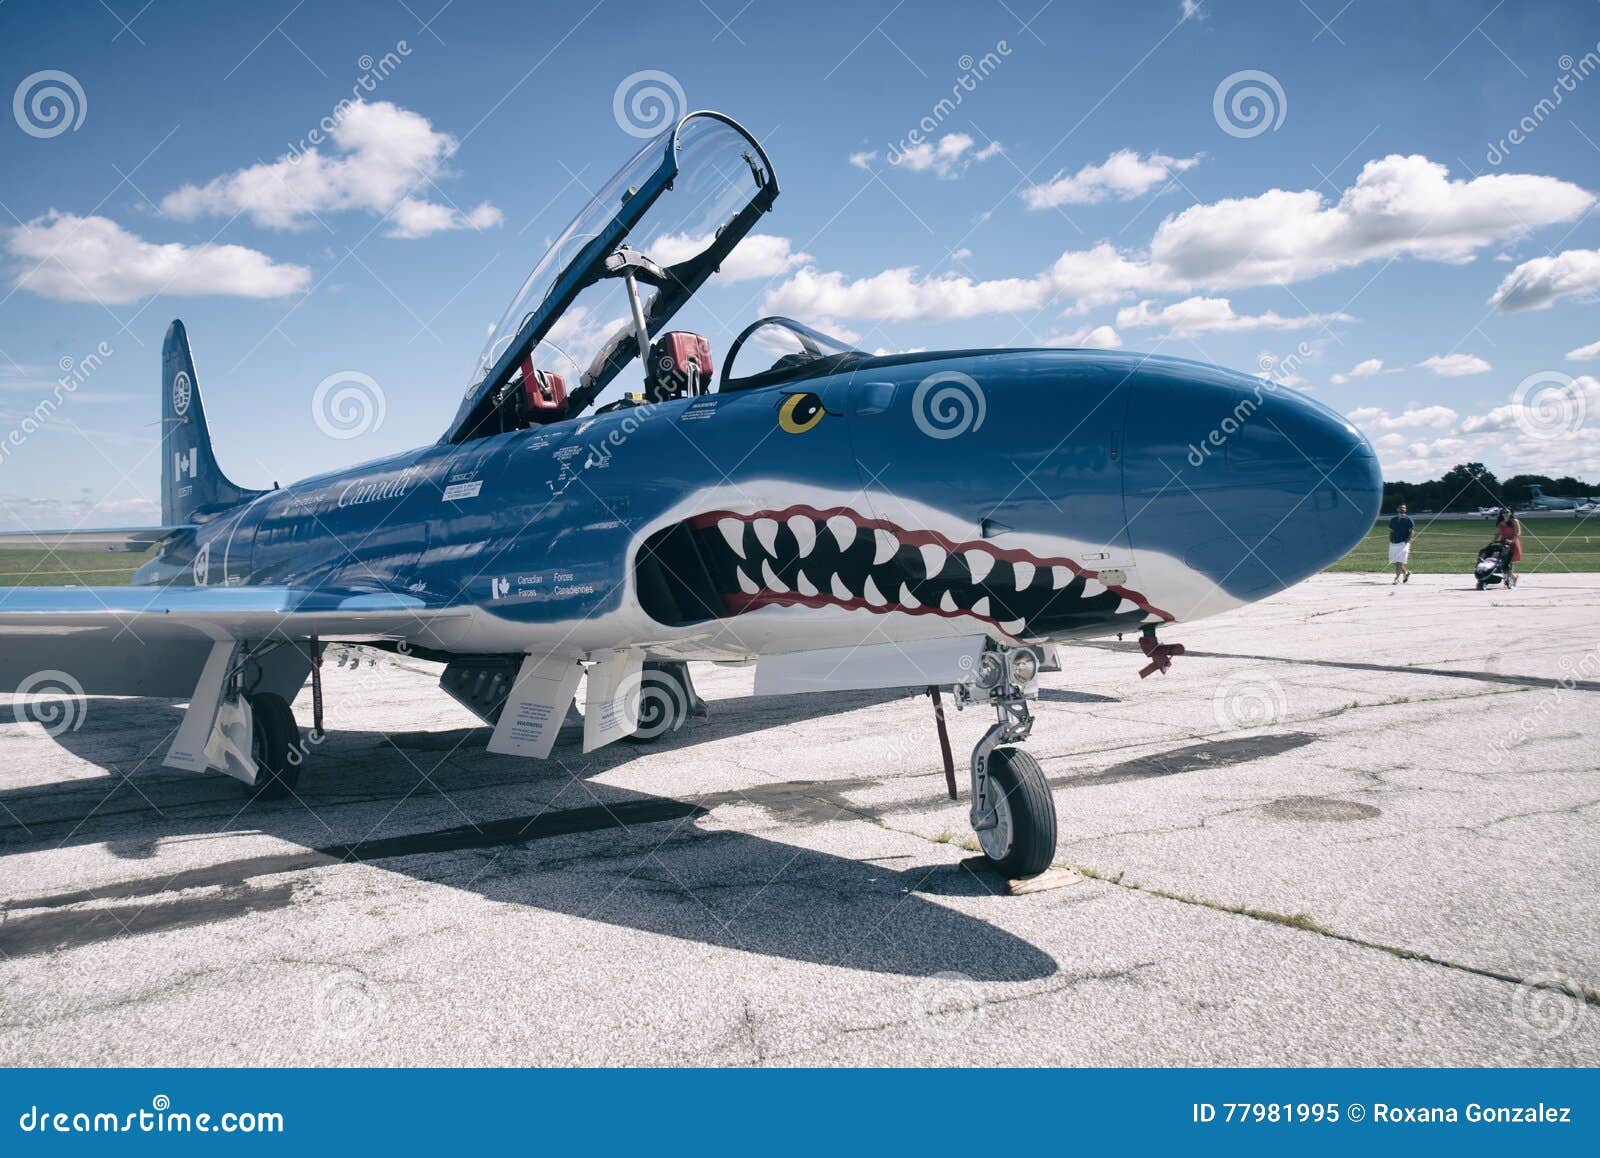 Shark Fighter Jet